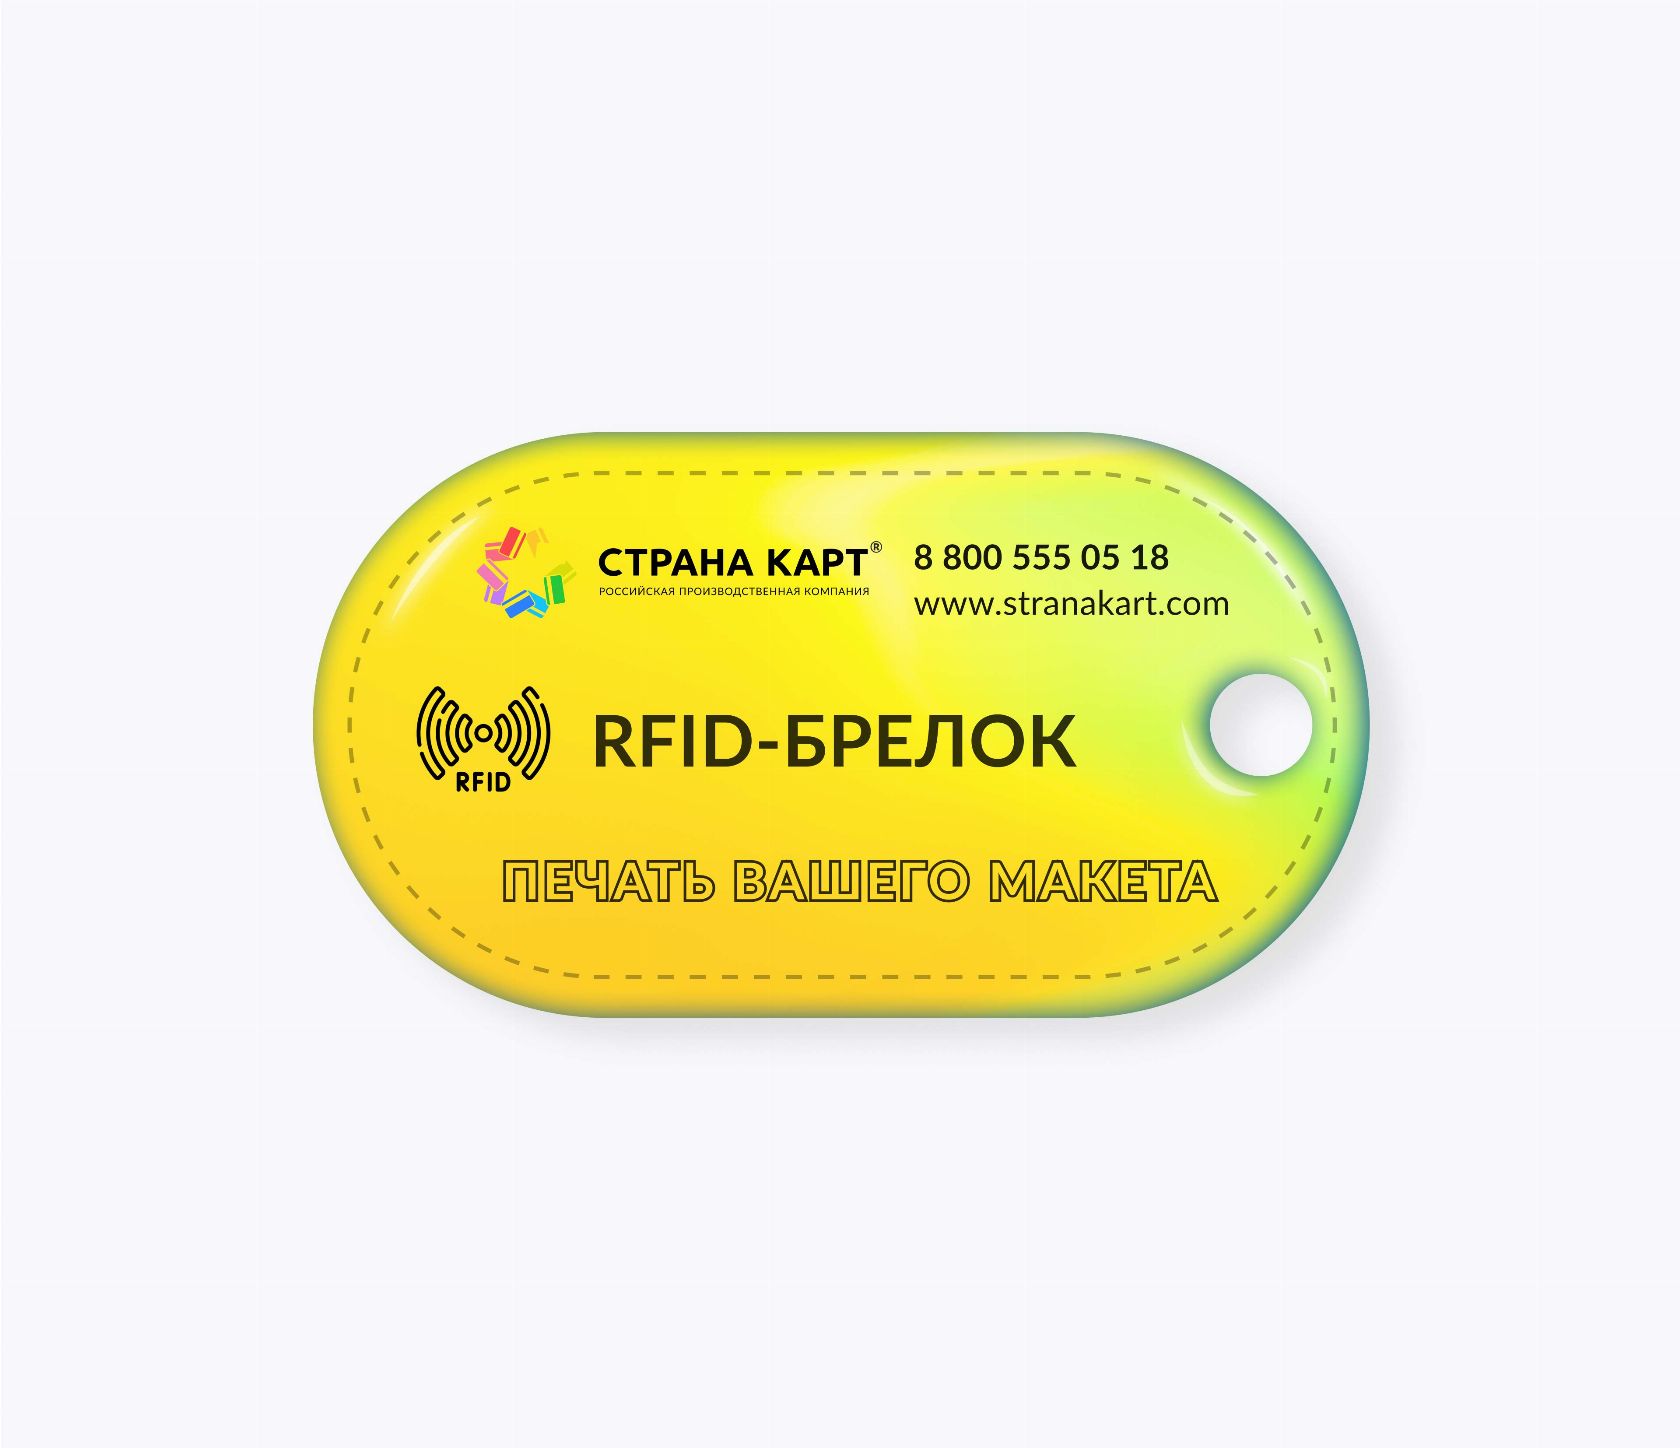 Овальные RFID-брелоки NEOKEY® с чипом NXP MIFARE Plus X 4k 7 byte UID RFID-брелоки NEOKEY® с чипом NXP MIFARE Plus X 4k 7 byte UID и вашим логотипом